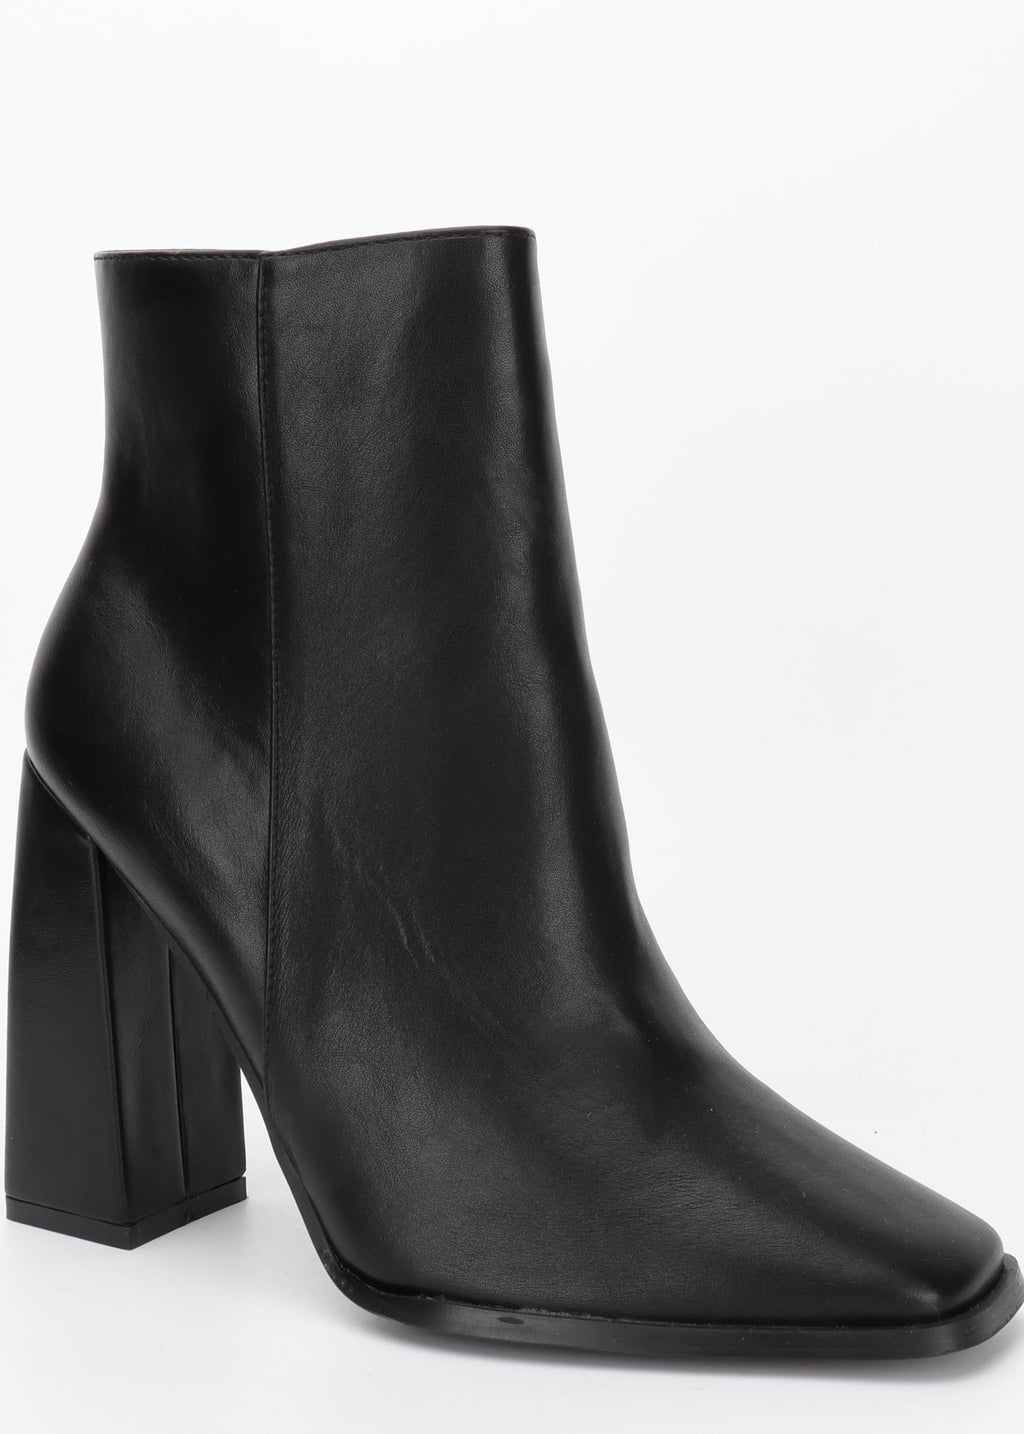 Black heeled Boots